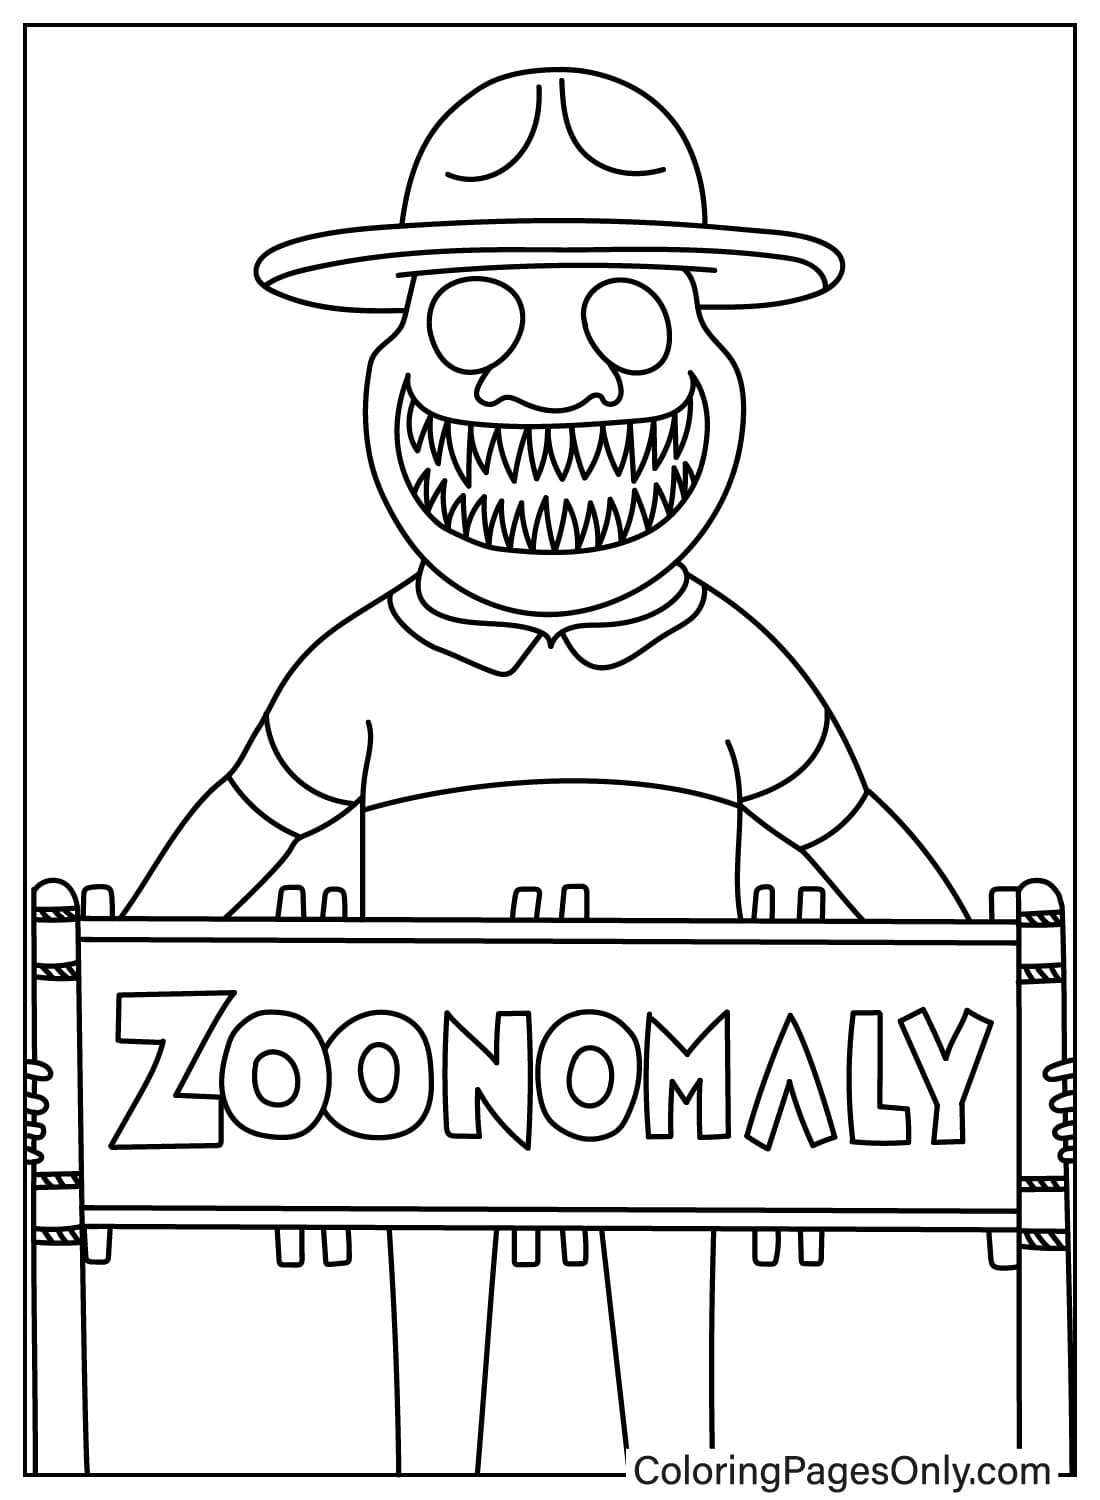 Folha para colorir de Zoonomaly de Zoonomaly